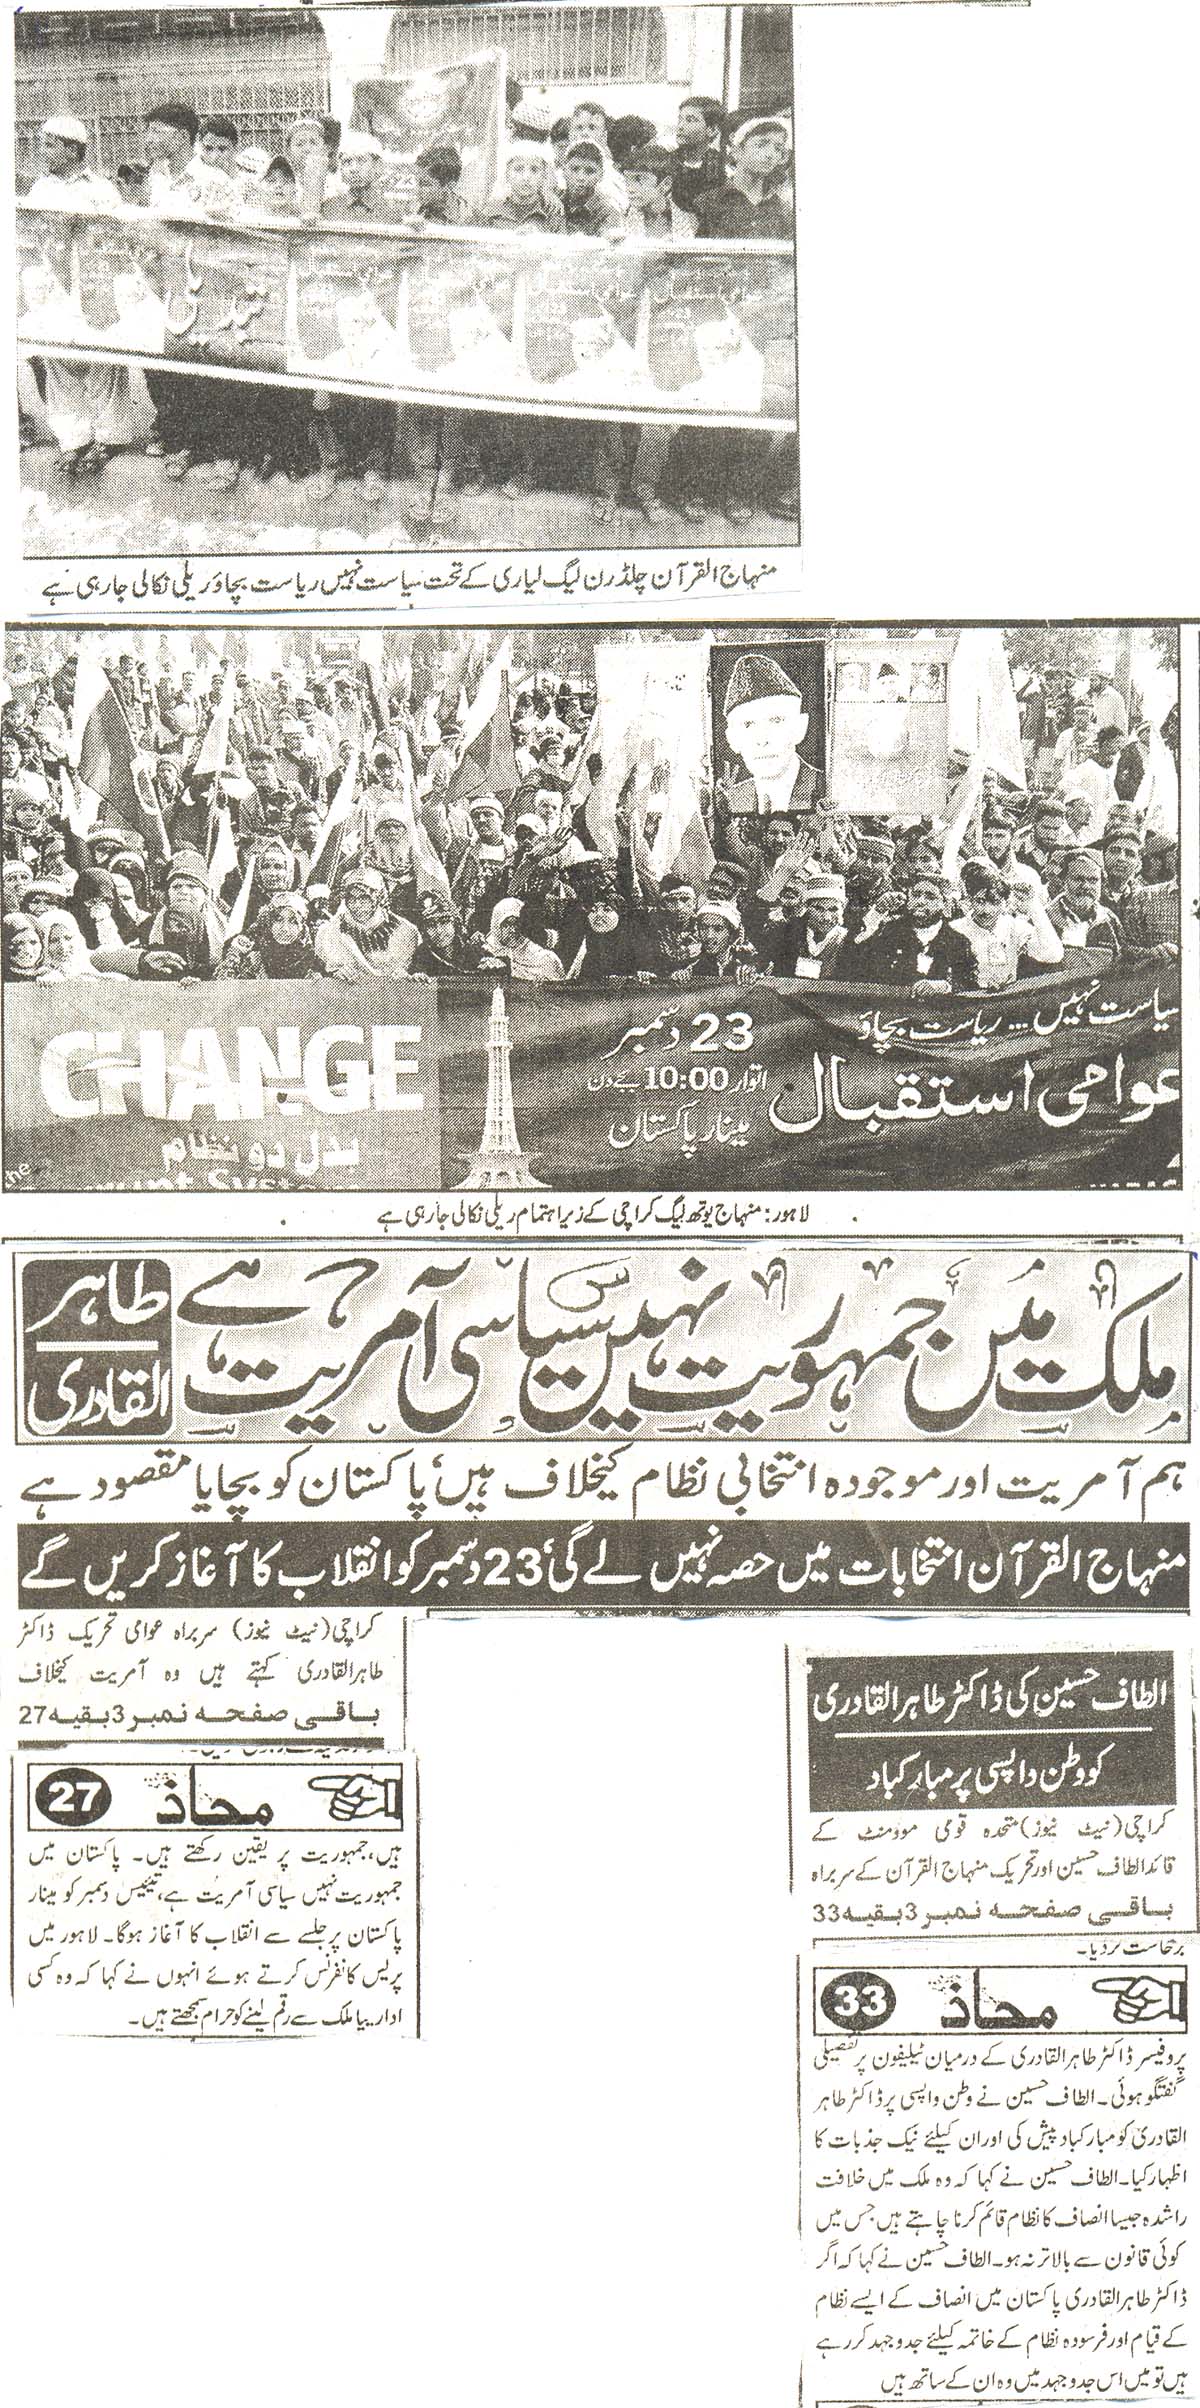 Minhaj-ul-Quran  Print Media Coveragedaily muhaaz page 3